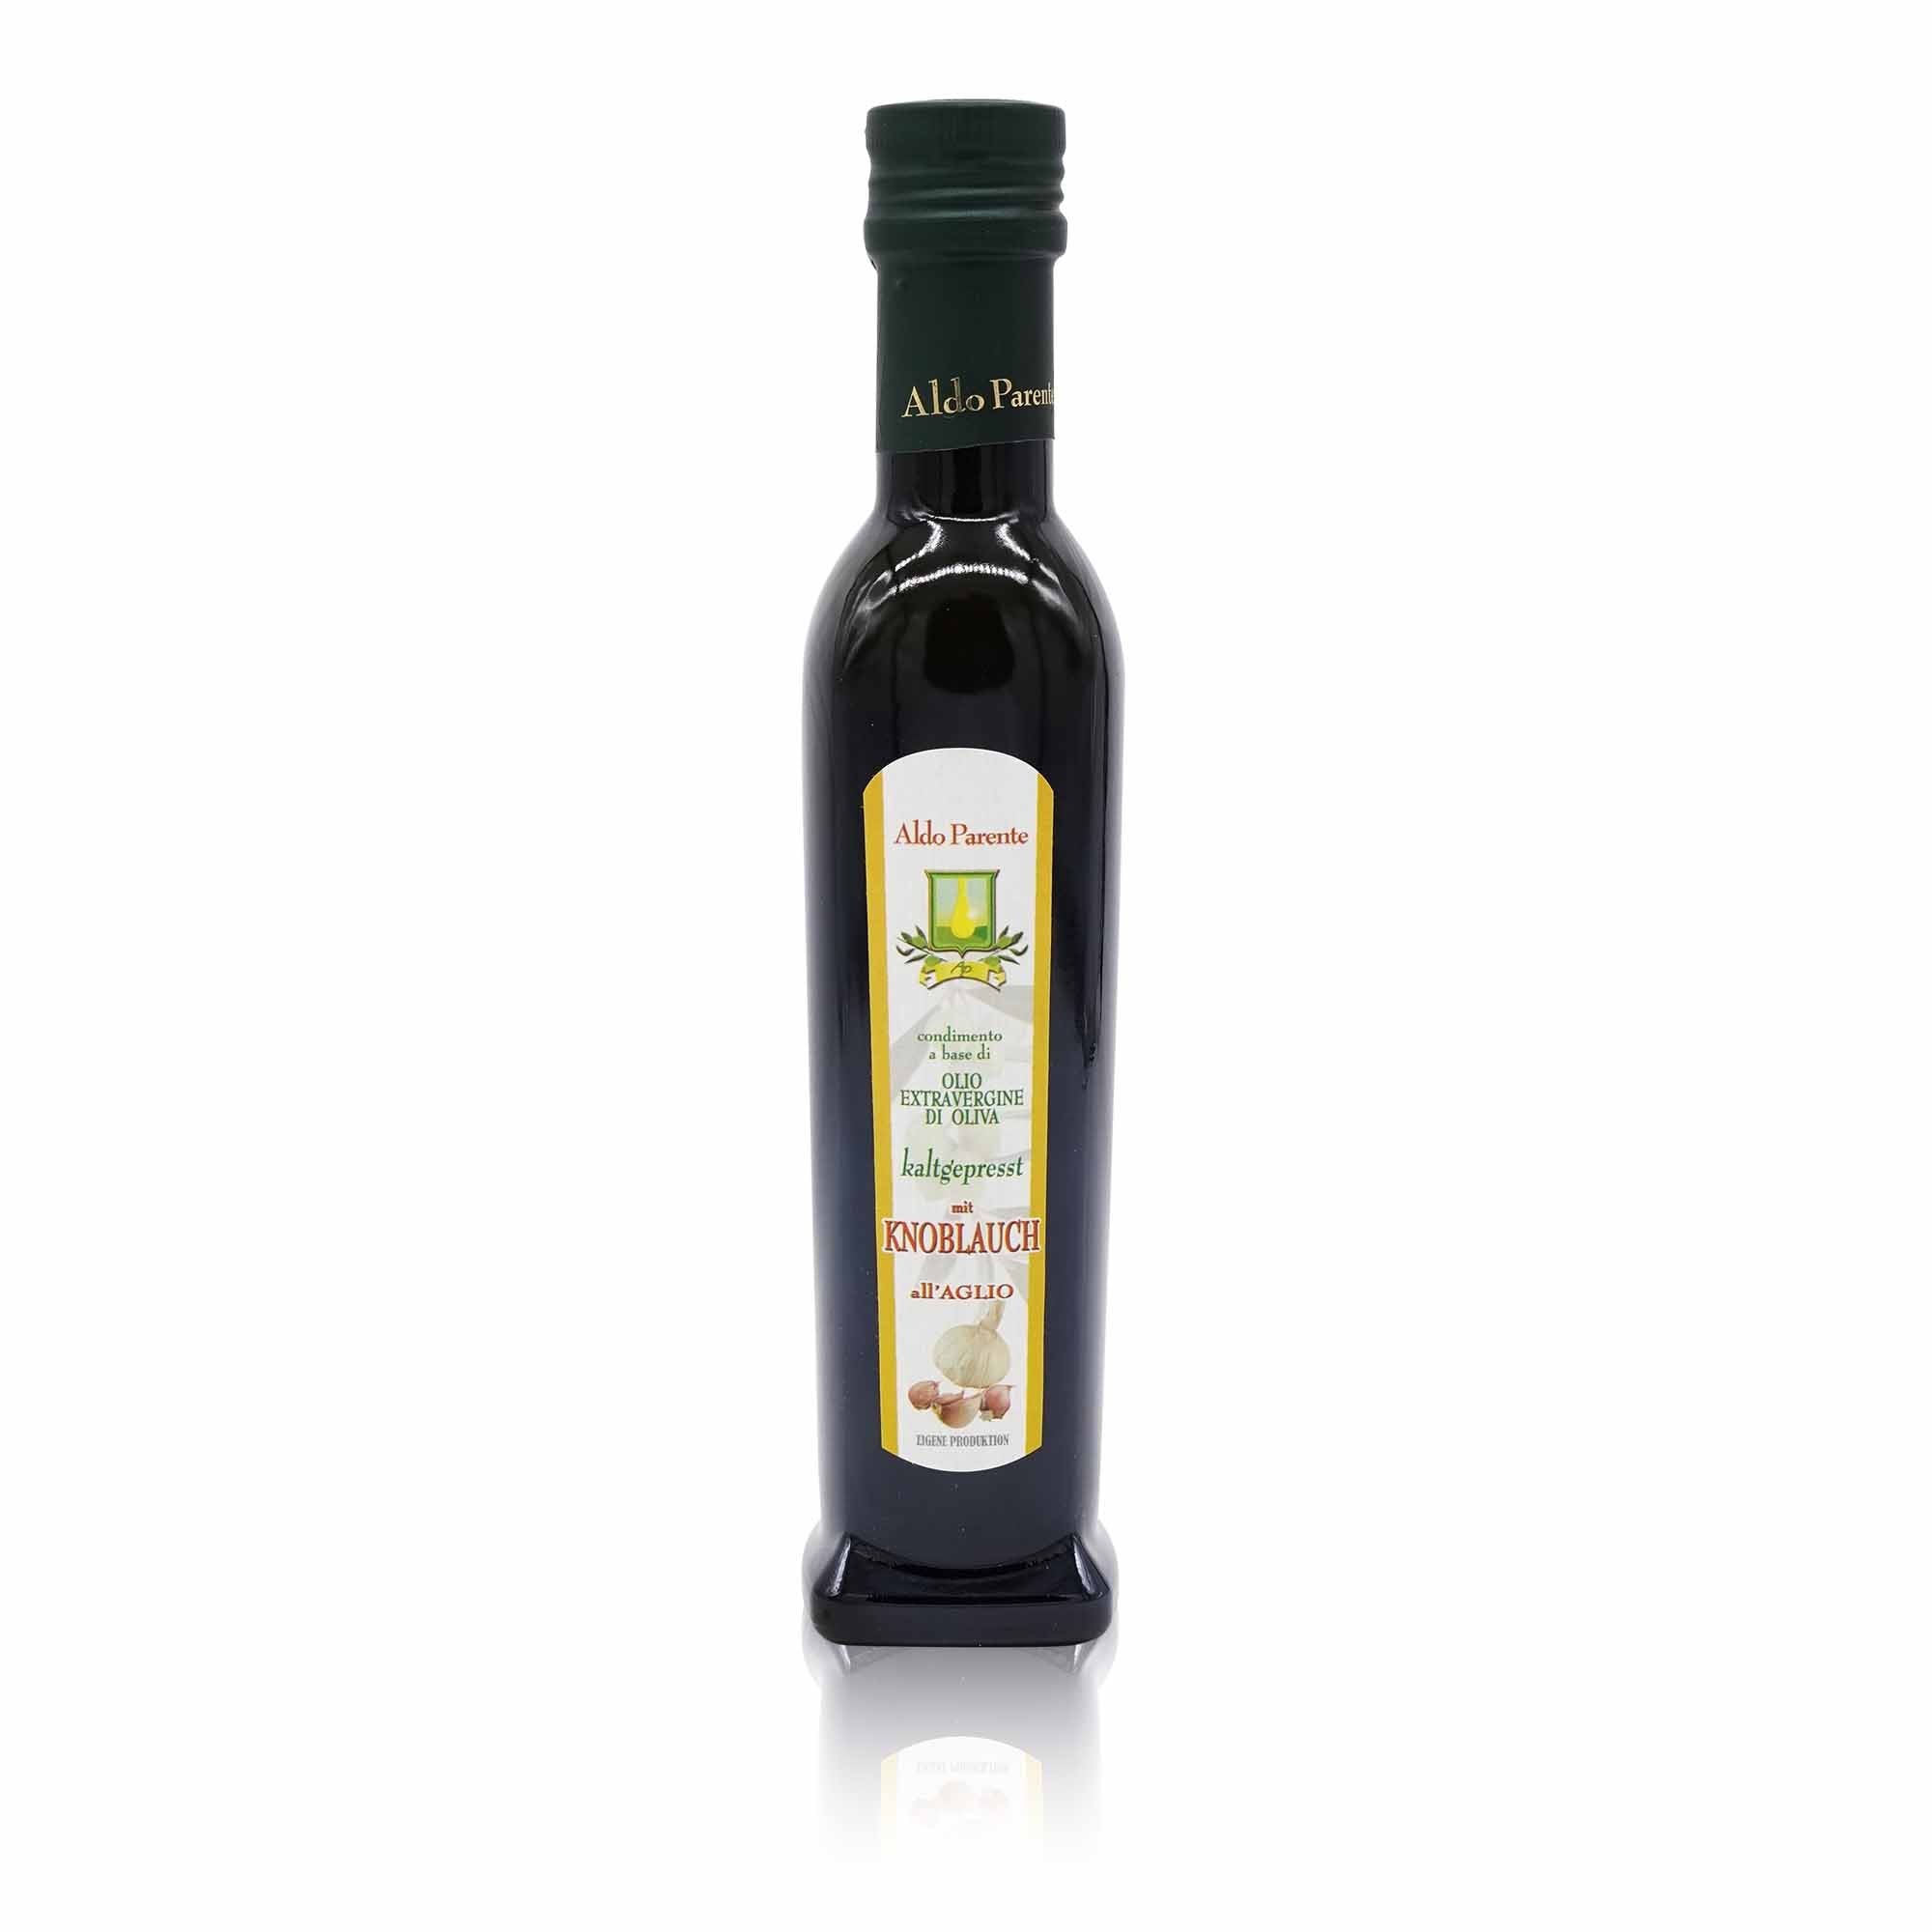 PARENTE Olio d'Oliva E.V. all'Aglio – Olivenöl nativ extra mit Knoblauch - 0,250l - italienisch - einkaufen.de